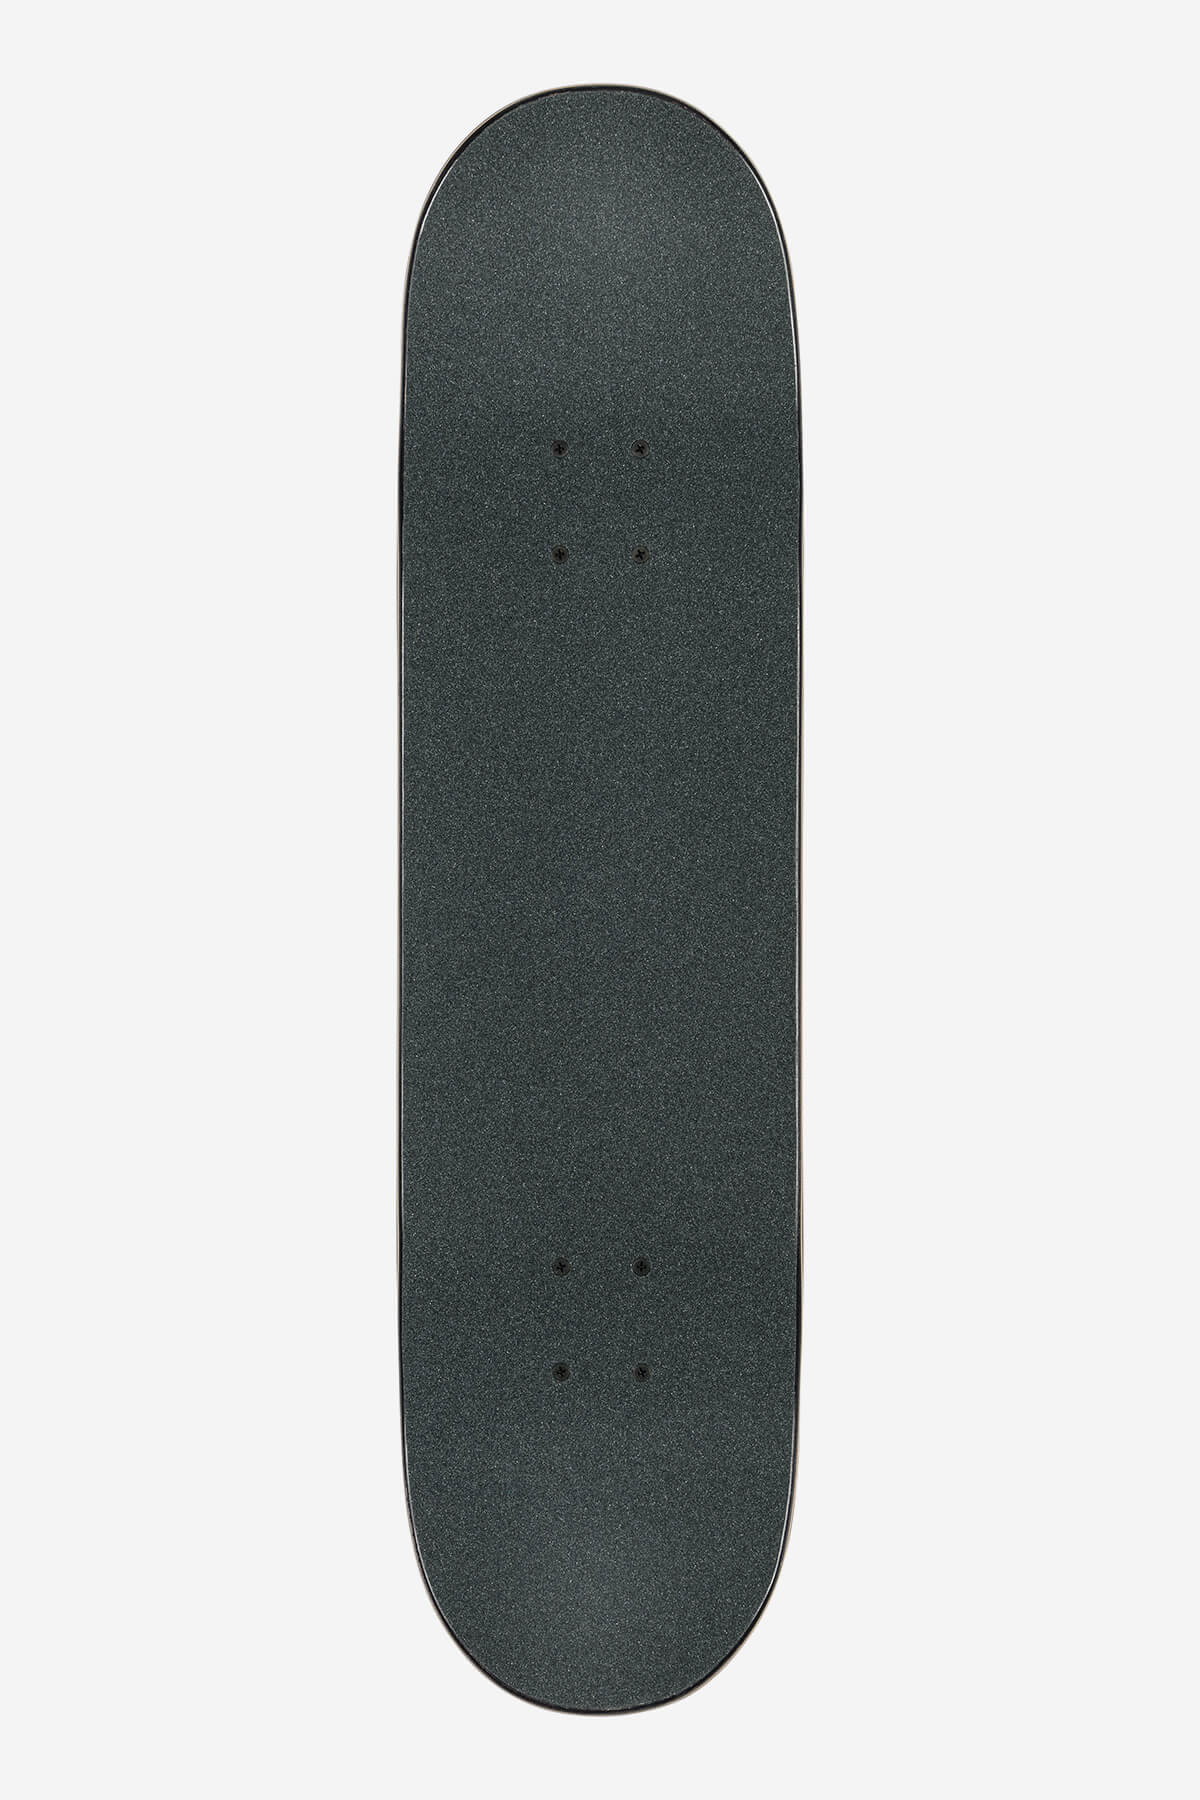 Globe - G1 Argo - Zwart/Camo - 8,125" Compleet Skateboard